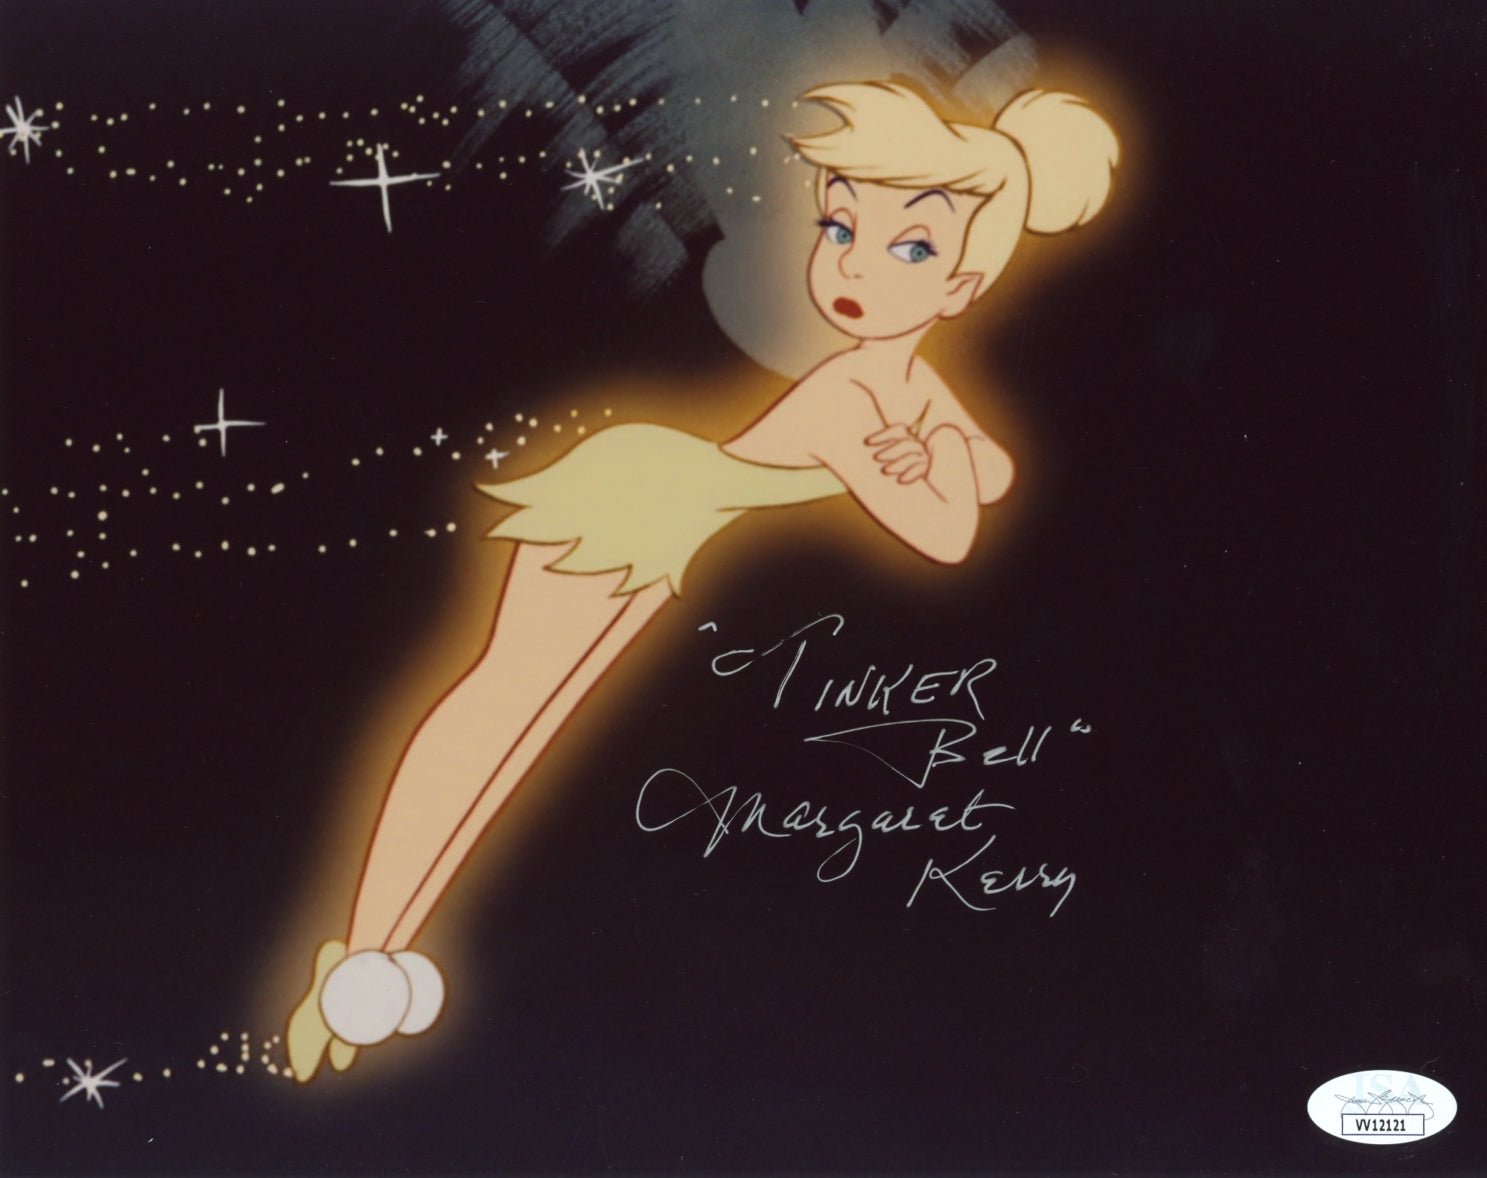 Margaret Kerry Disney Peter Pan 8x10 Signed Photo JSA COA Certified Autograph